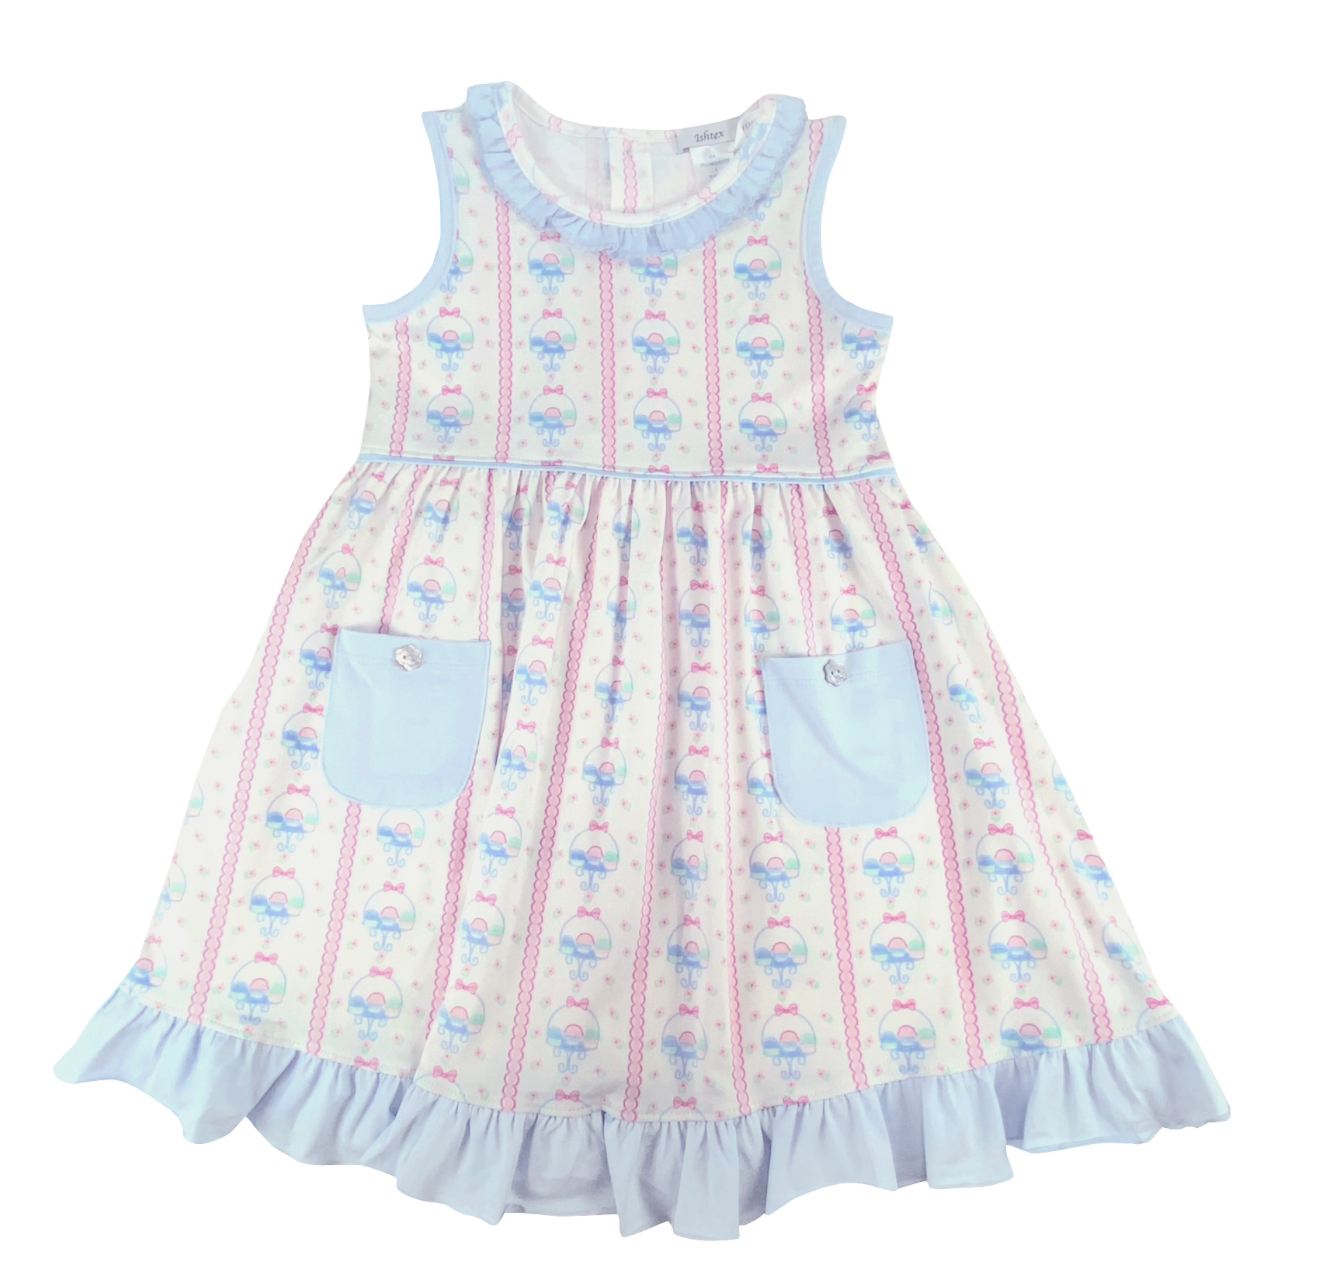 Cupcake Girl's Dress